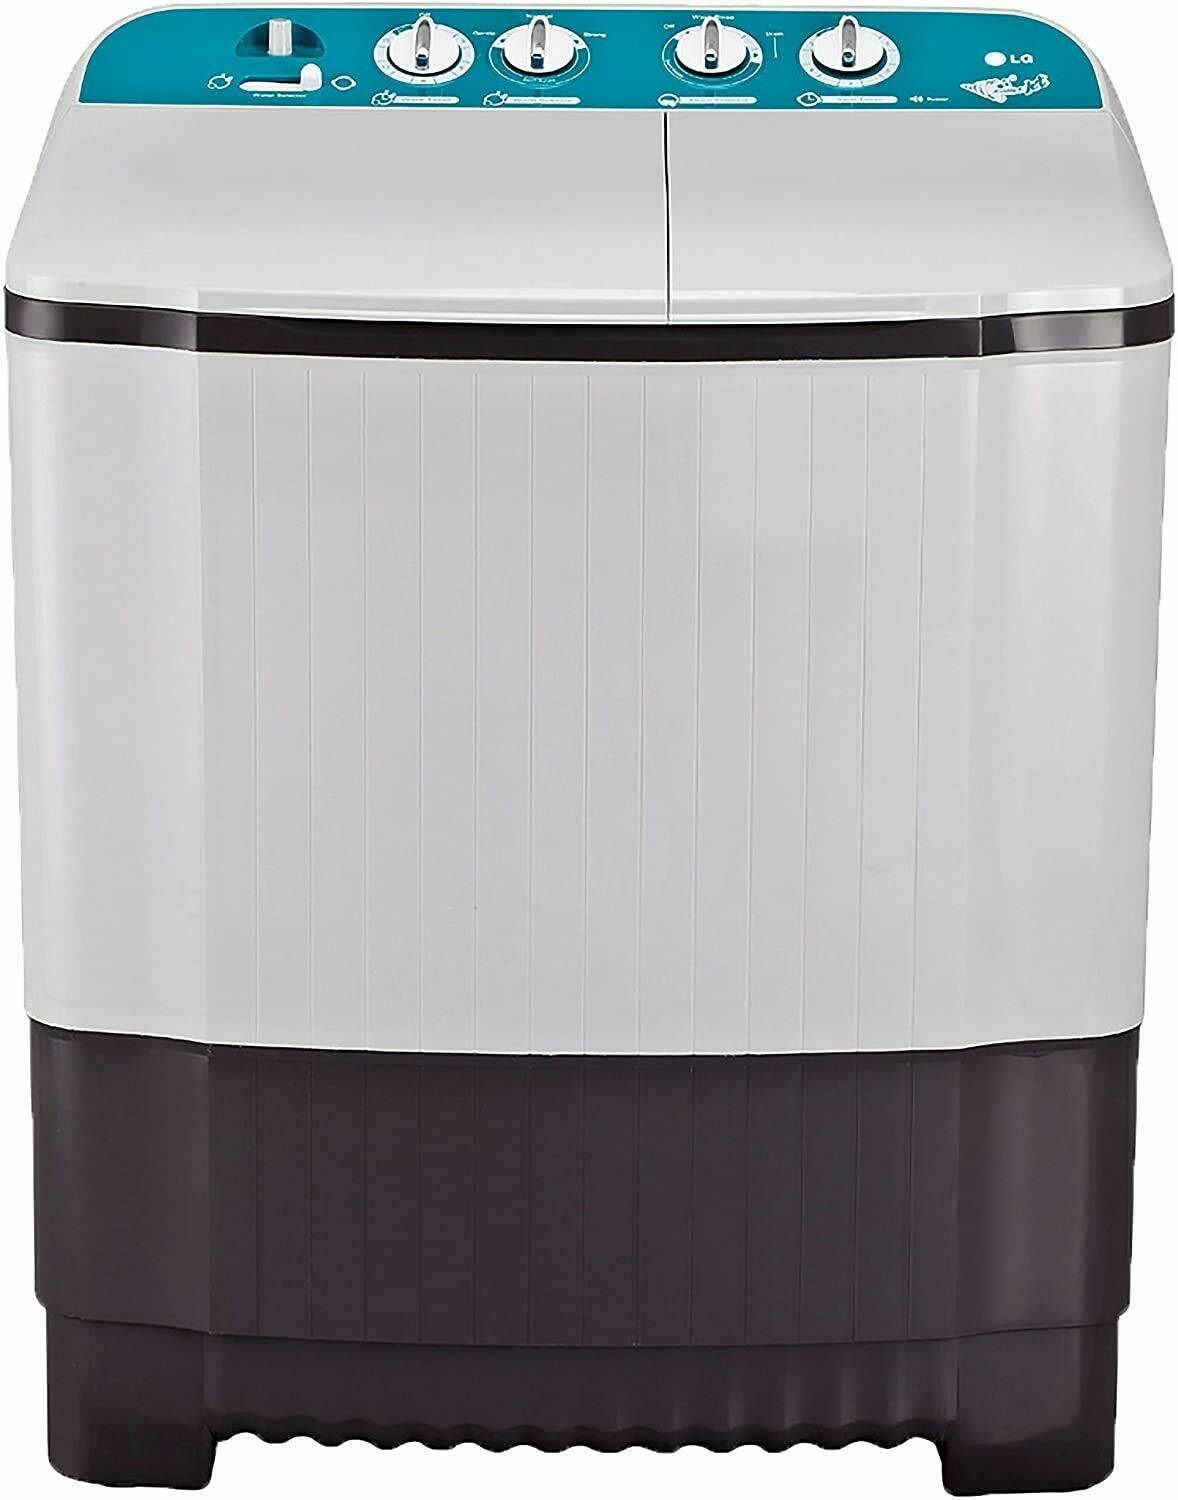 LG 6 Kg Semi-Automatic Top Loading Washing Machine (P6001RG)